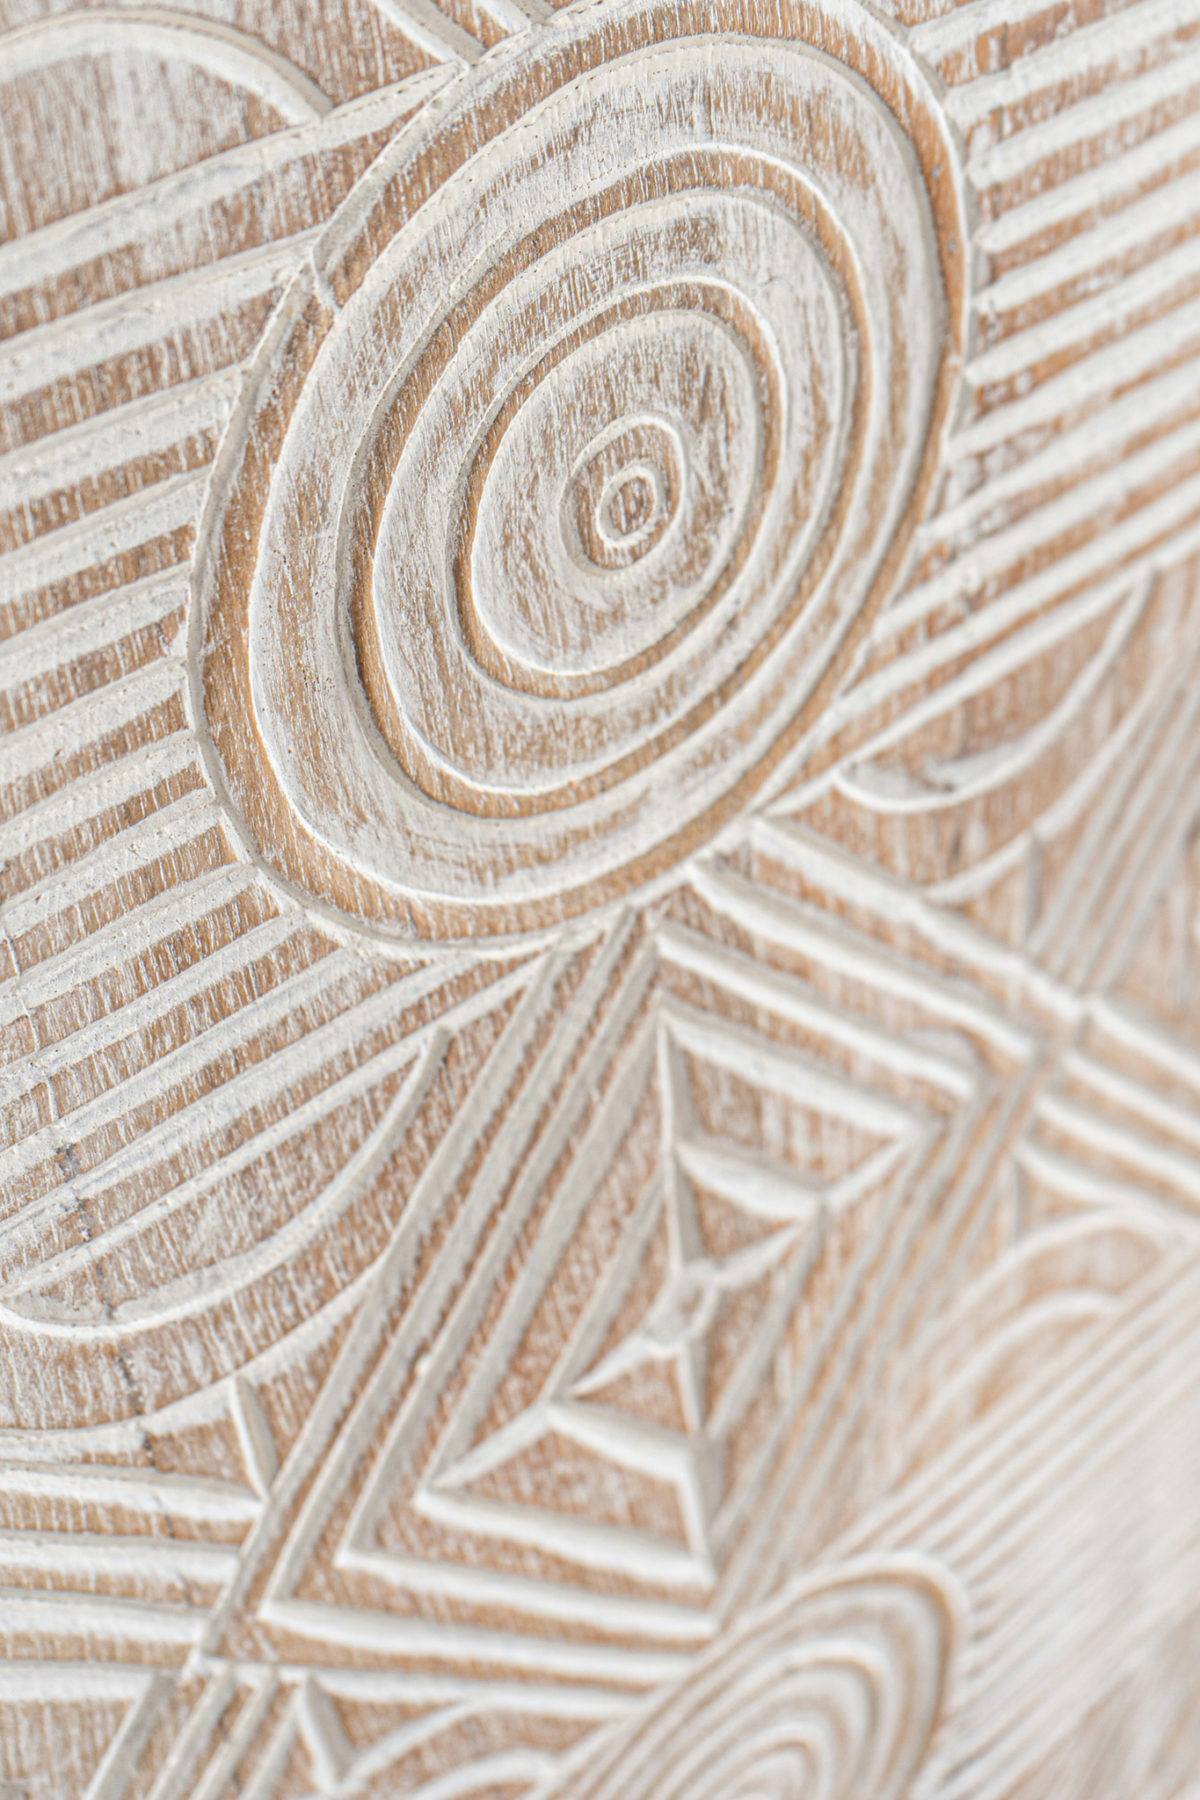 Symmetrical pattern on wood